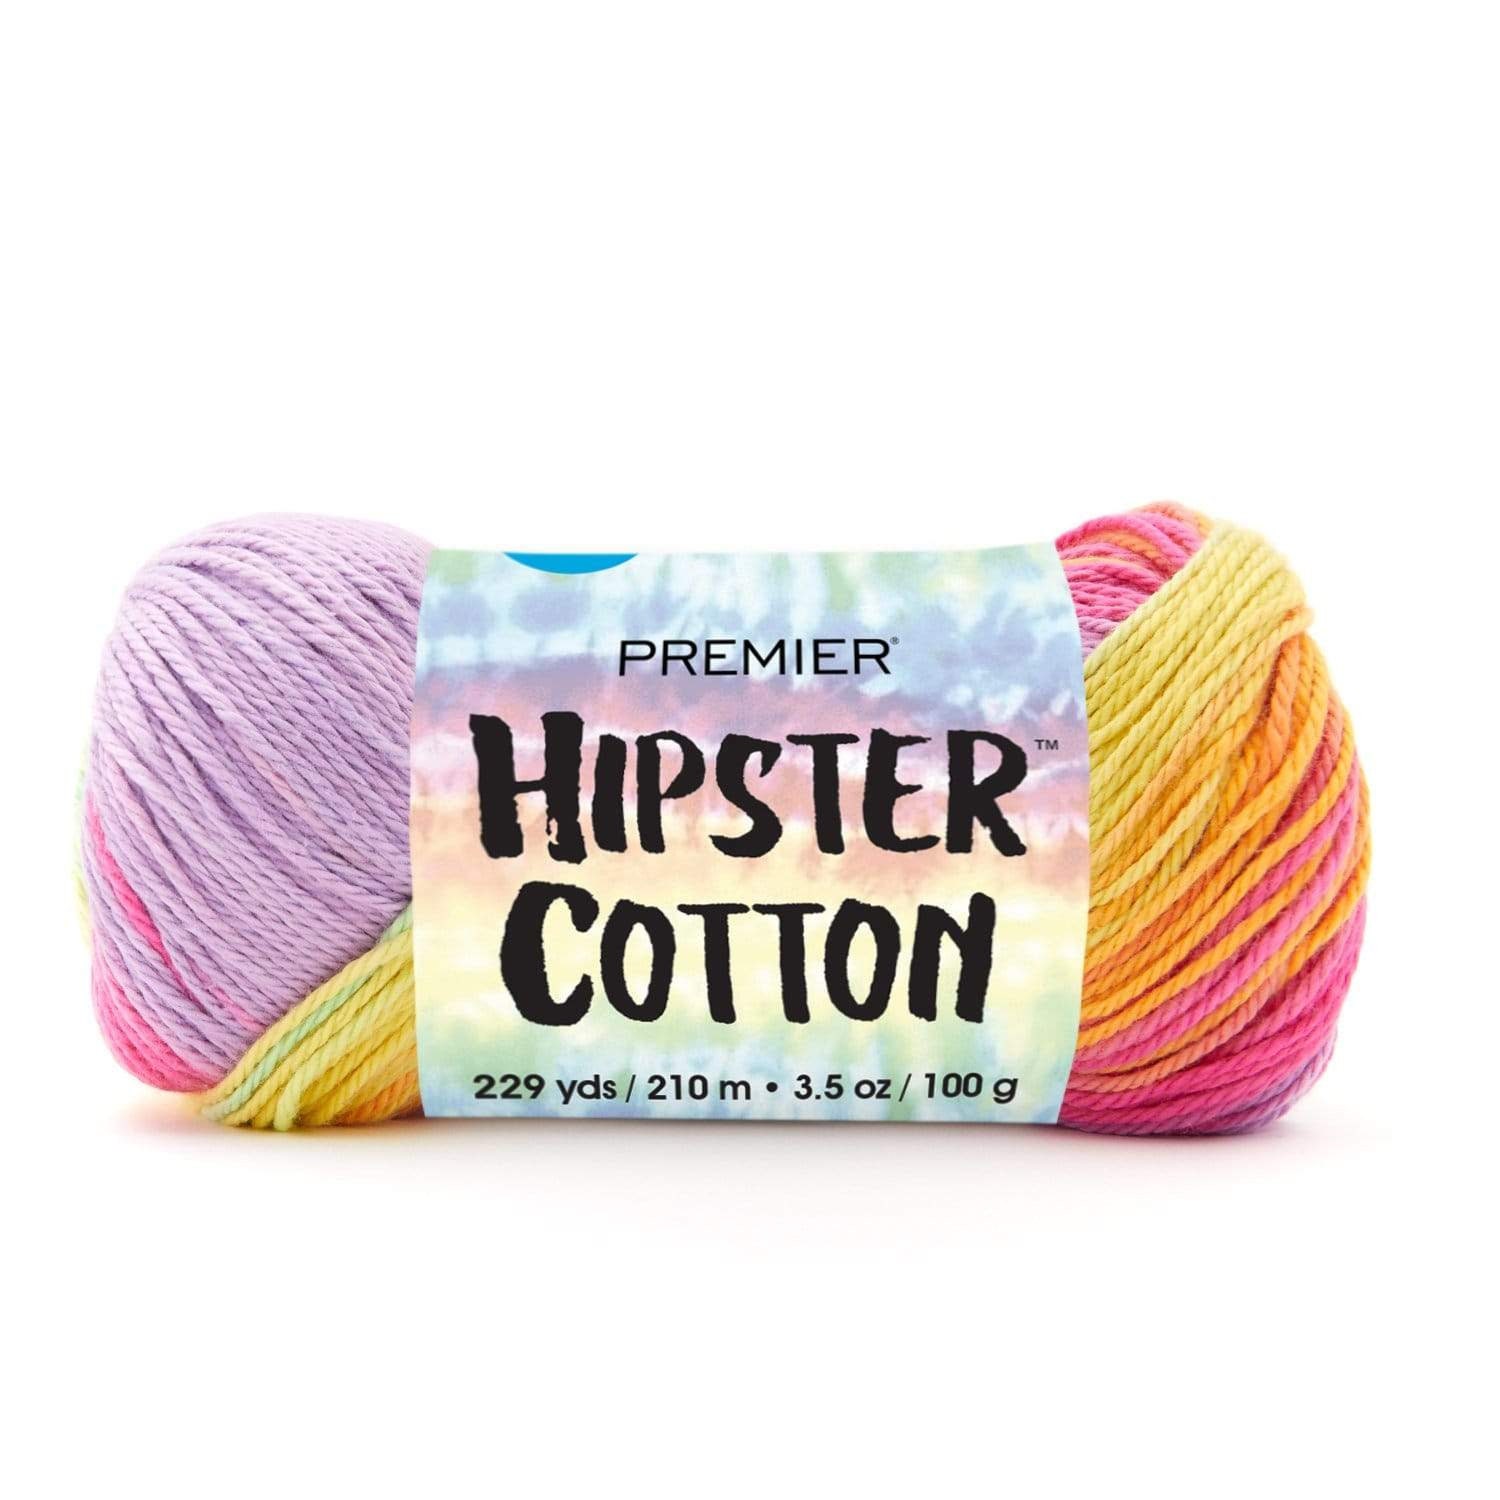 Cotton & Cotton Blend Yarn - Premier® Yarns Home™ Cotton